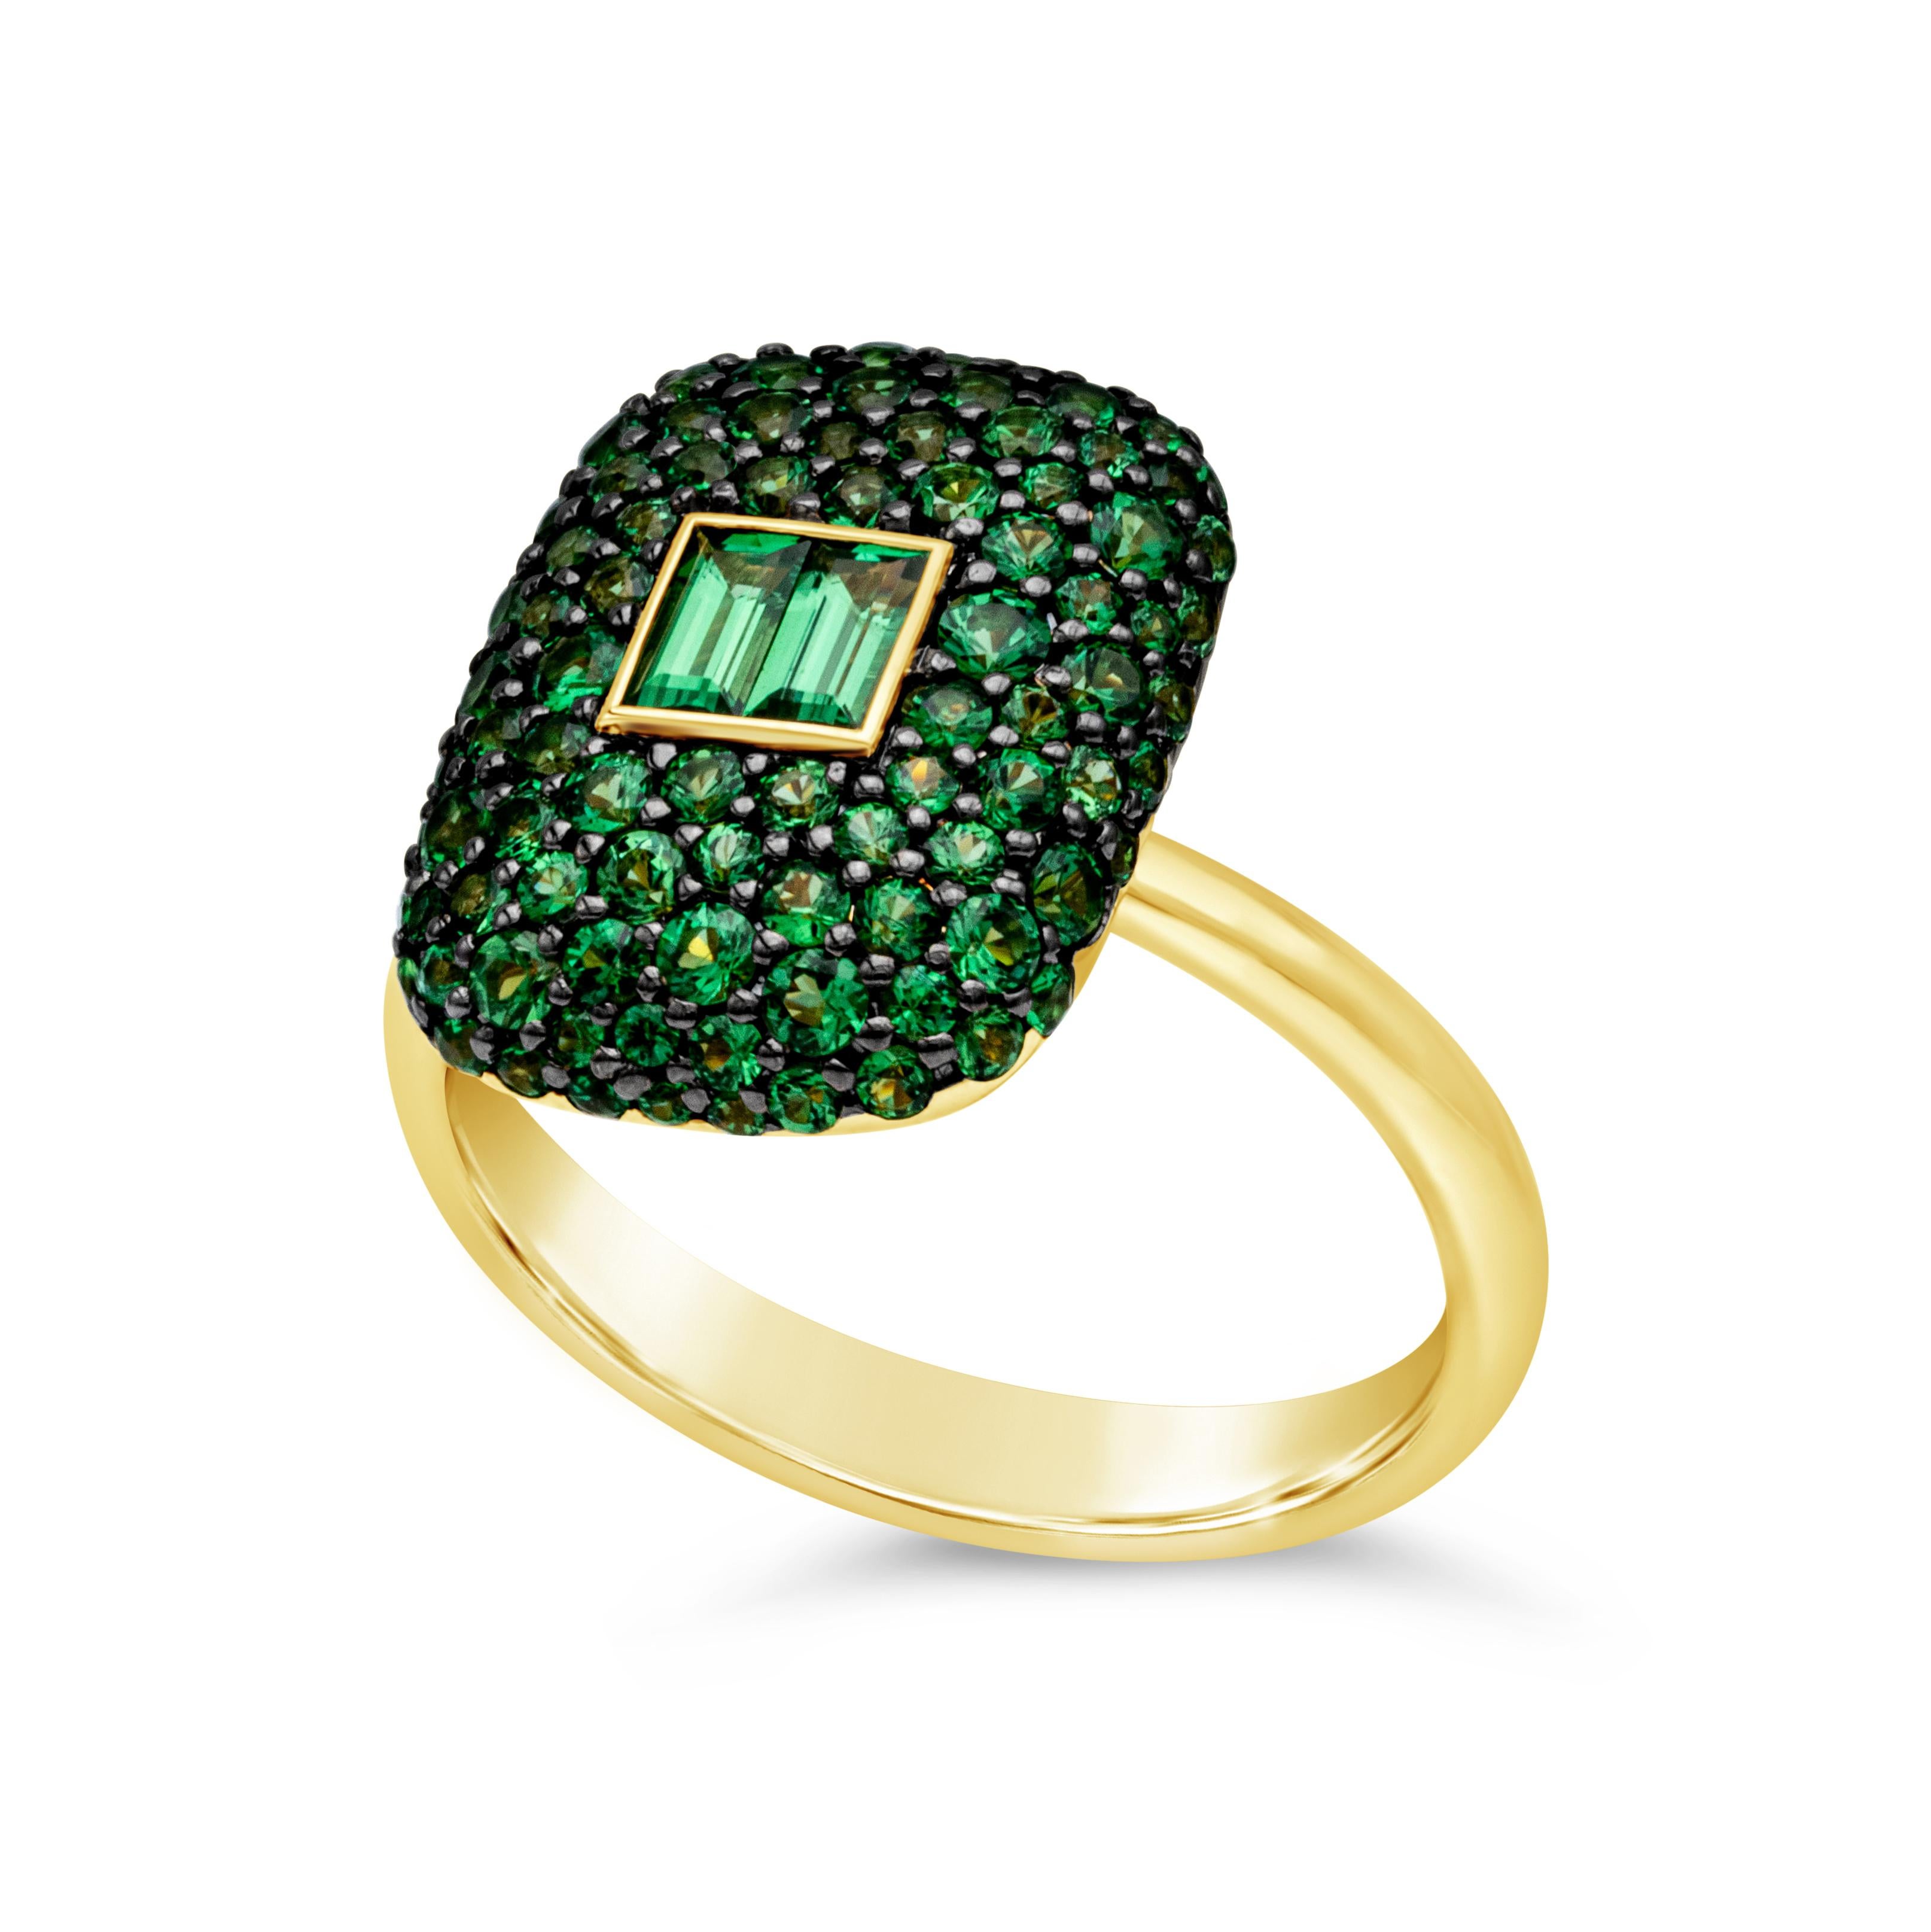 Contemporary Roman Malakov  1.57 Carat Total Mixed Cut Green Tsavorite Fashion Ring For Sale